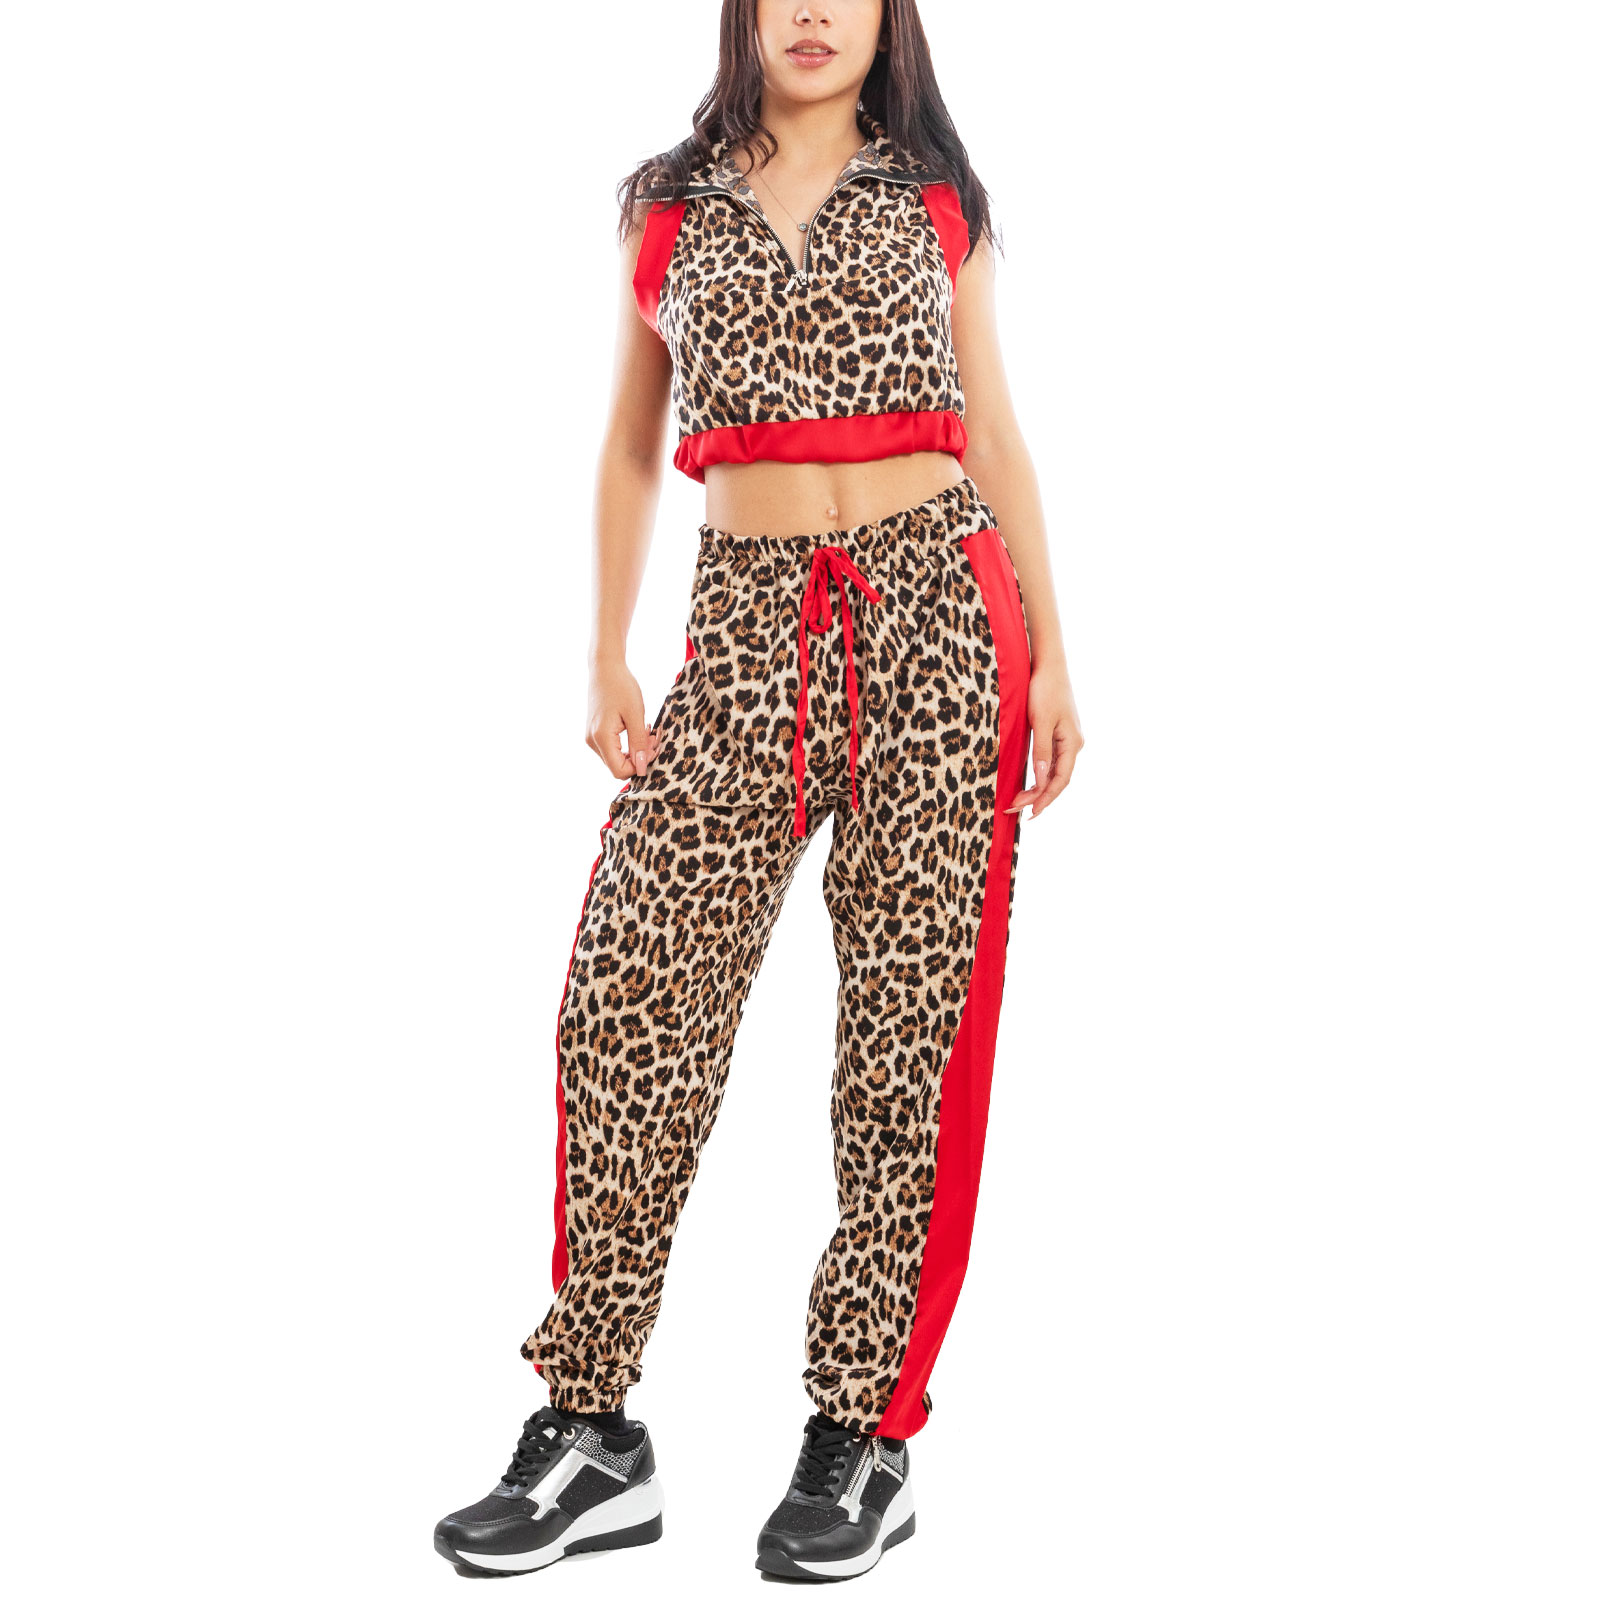 TOOCOOL leopard print women's tracksuit crop top trousers